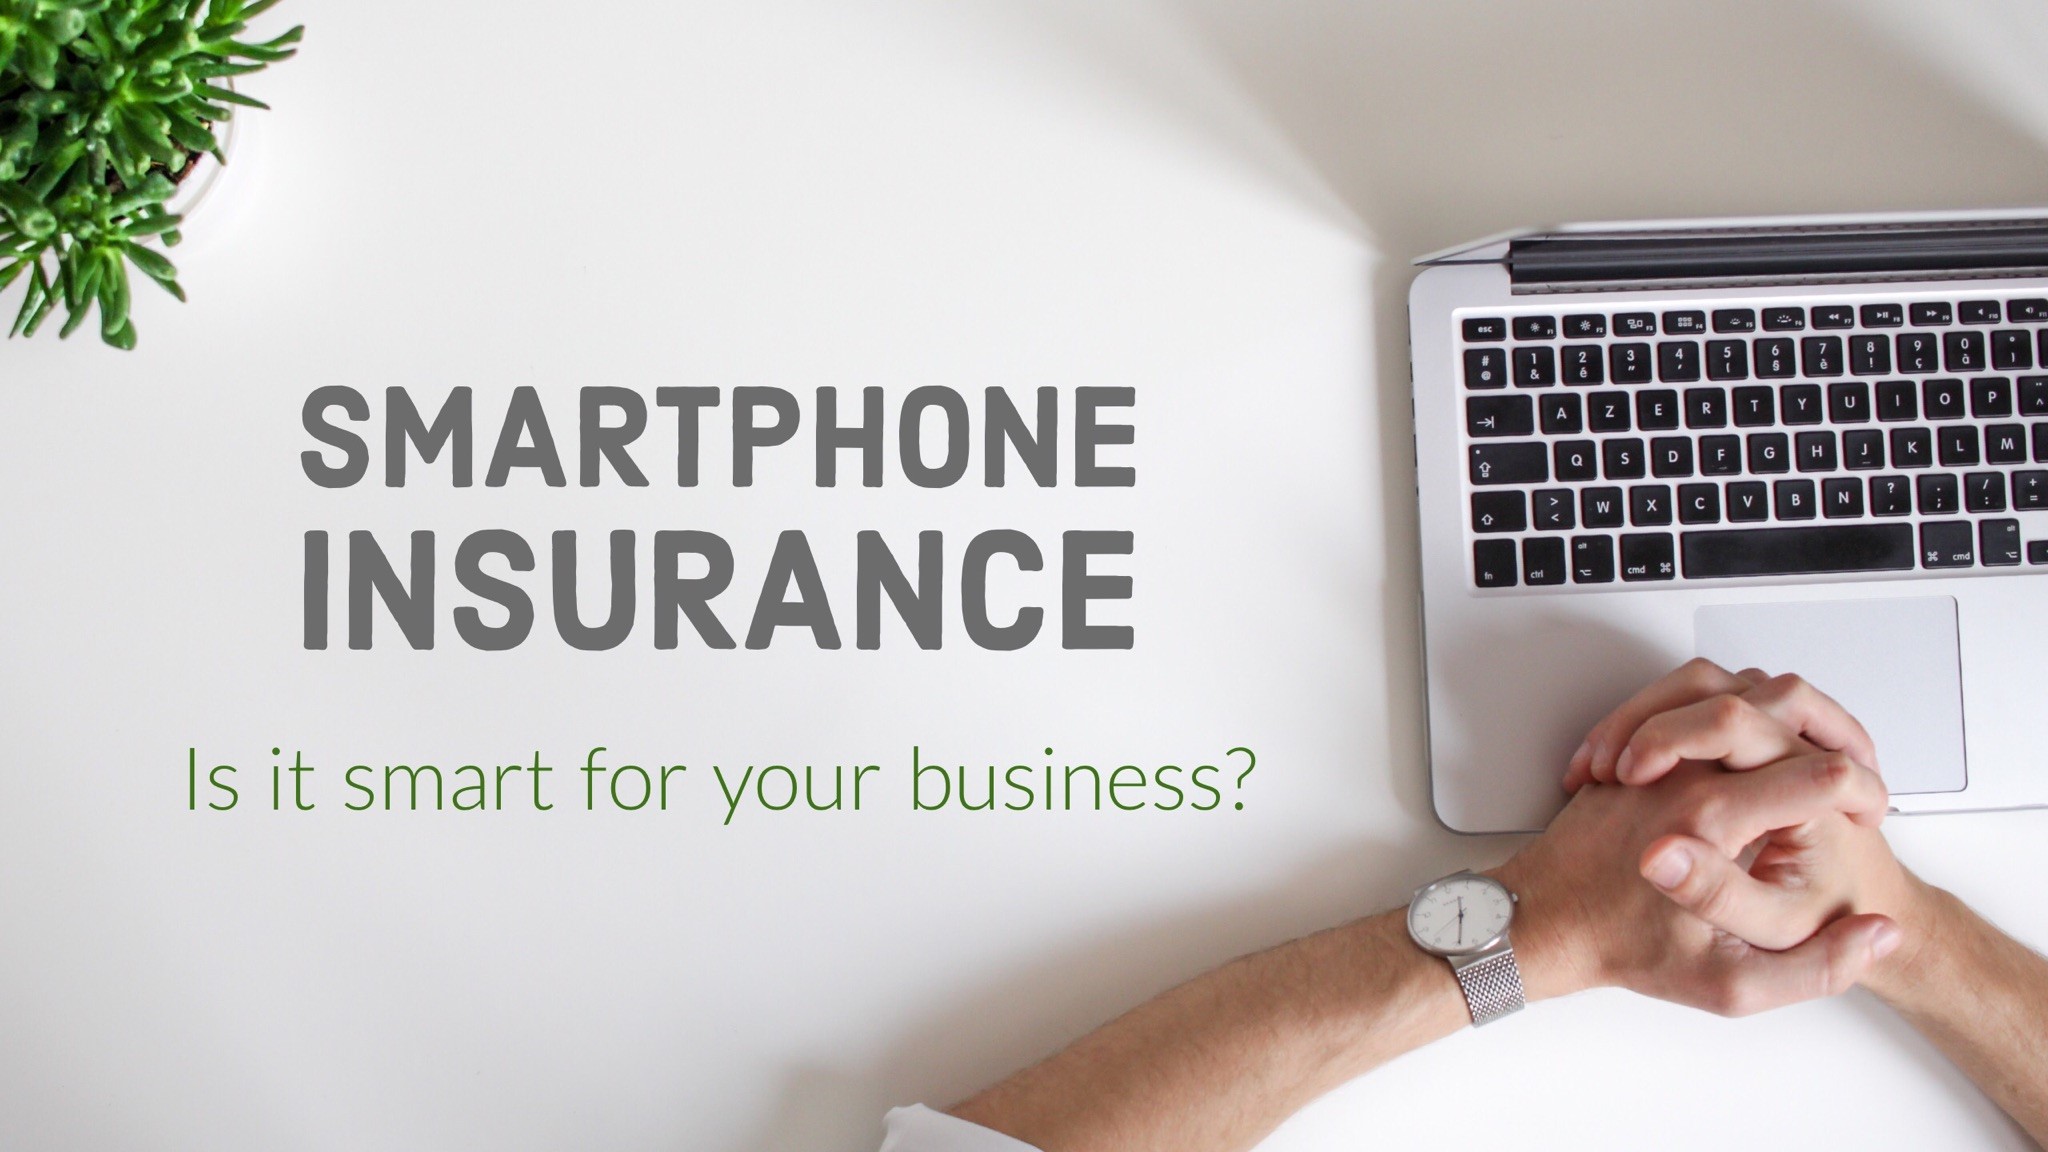 Smartphone Insurance